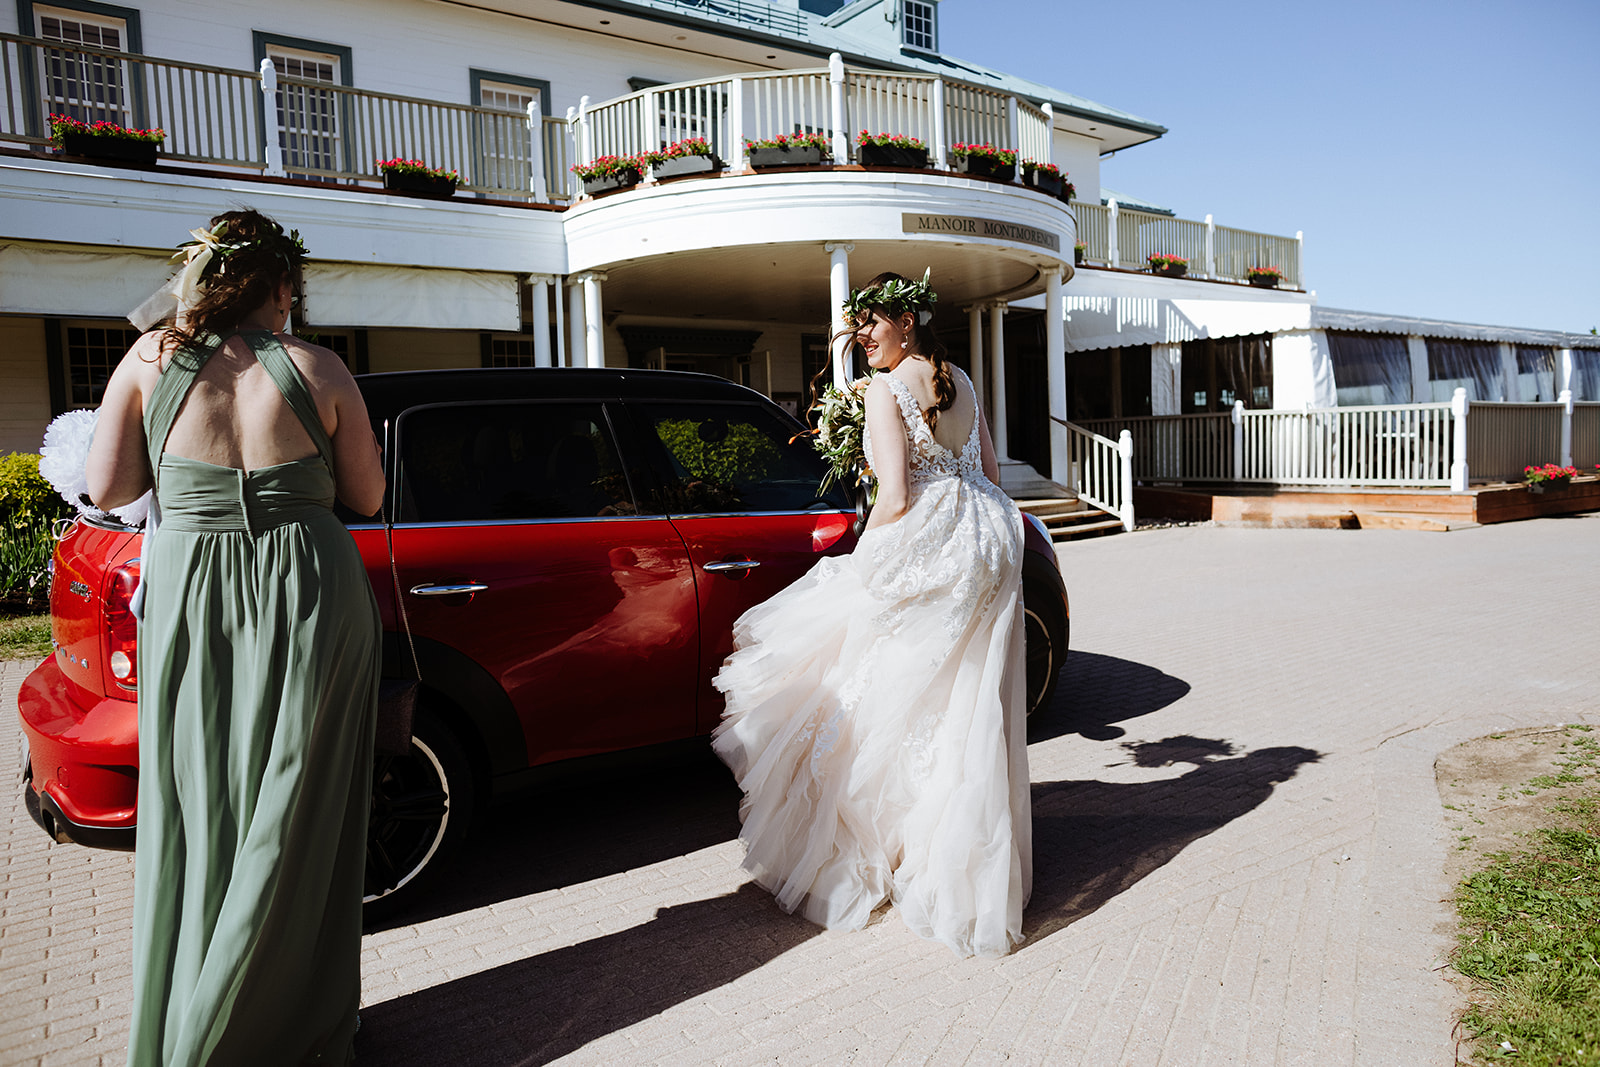 Bride arriving in her red car for her Manoir Montmorency Wedding